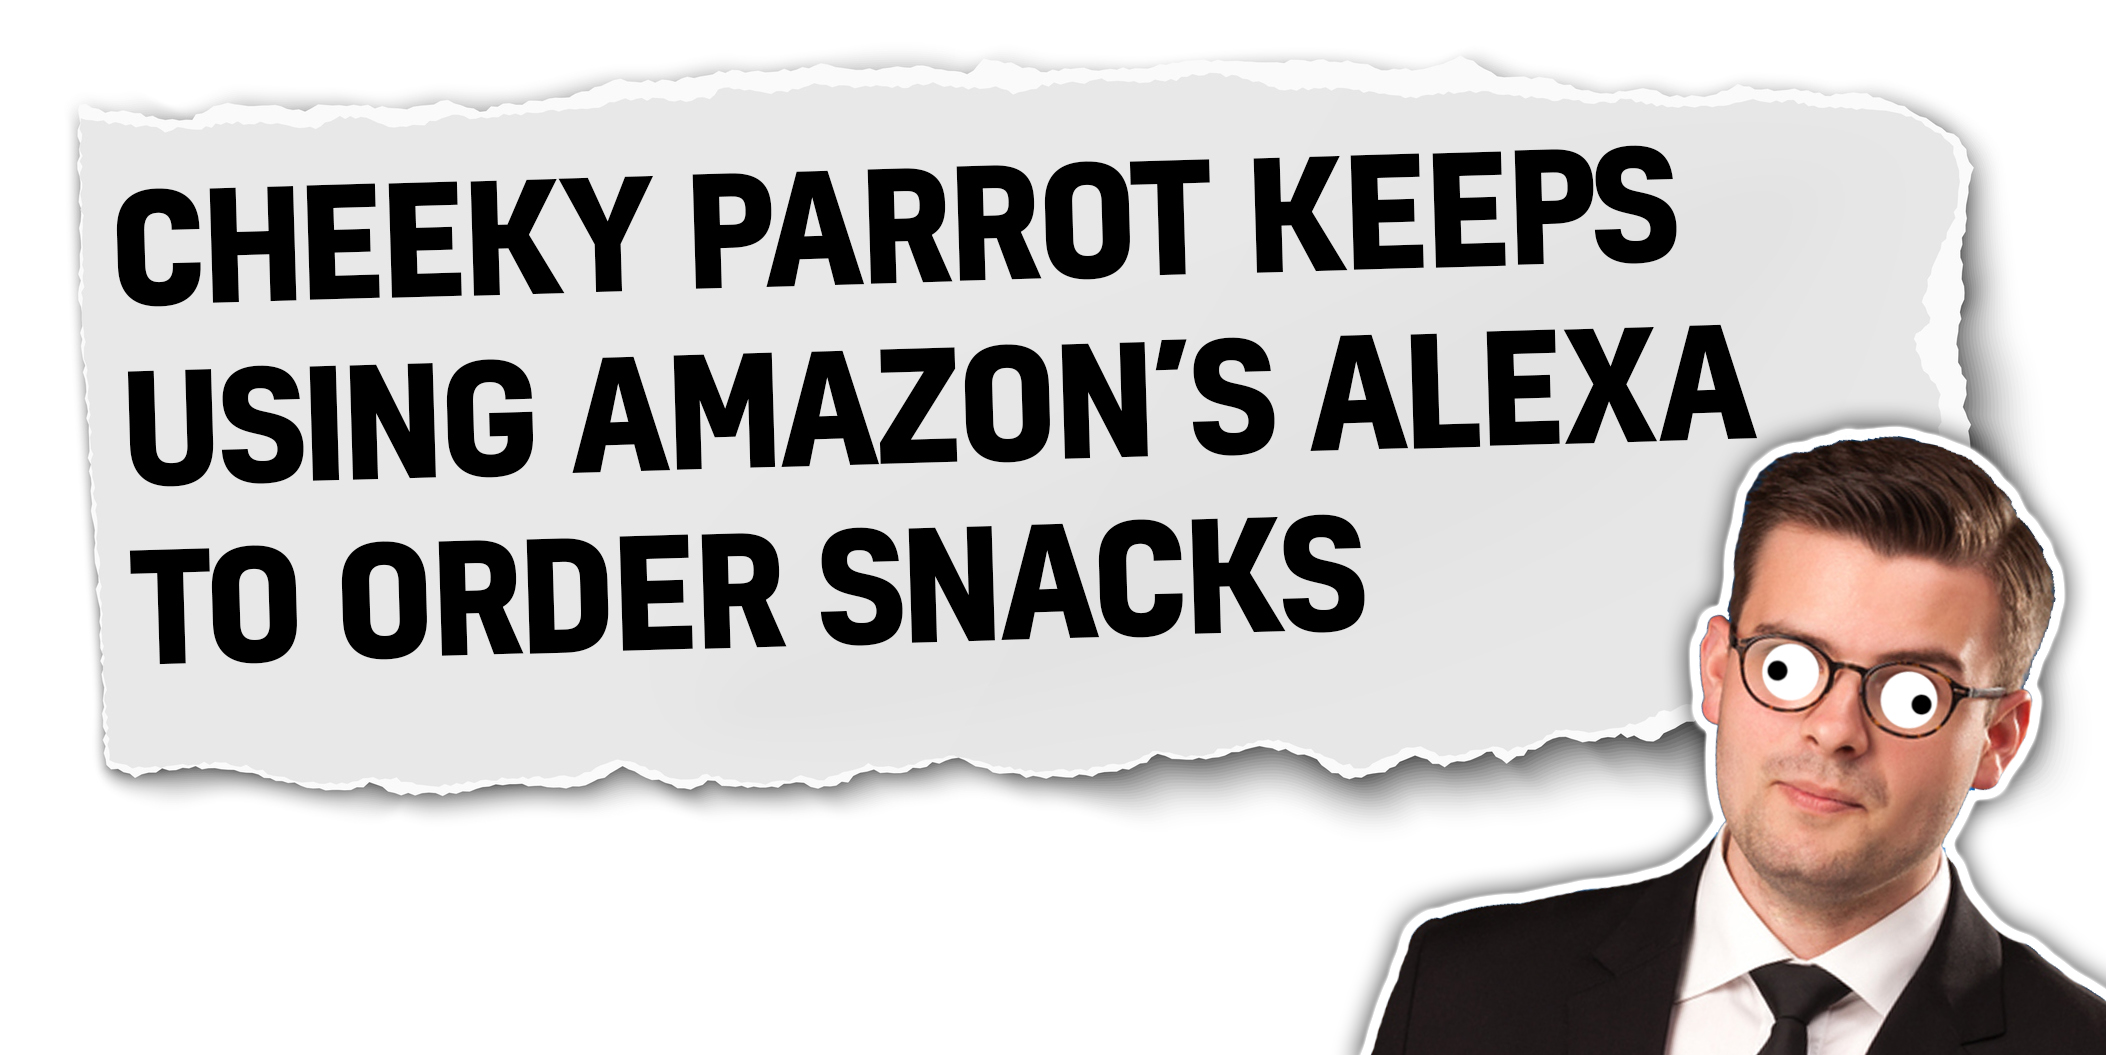 Cheeky parrot keeps using Amazon's Alexa to order snacks